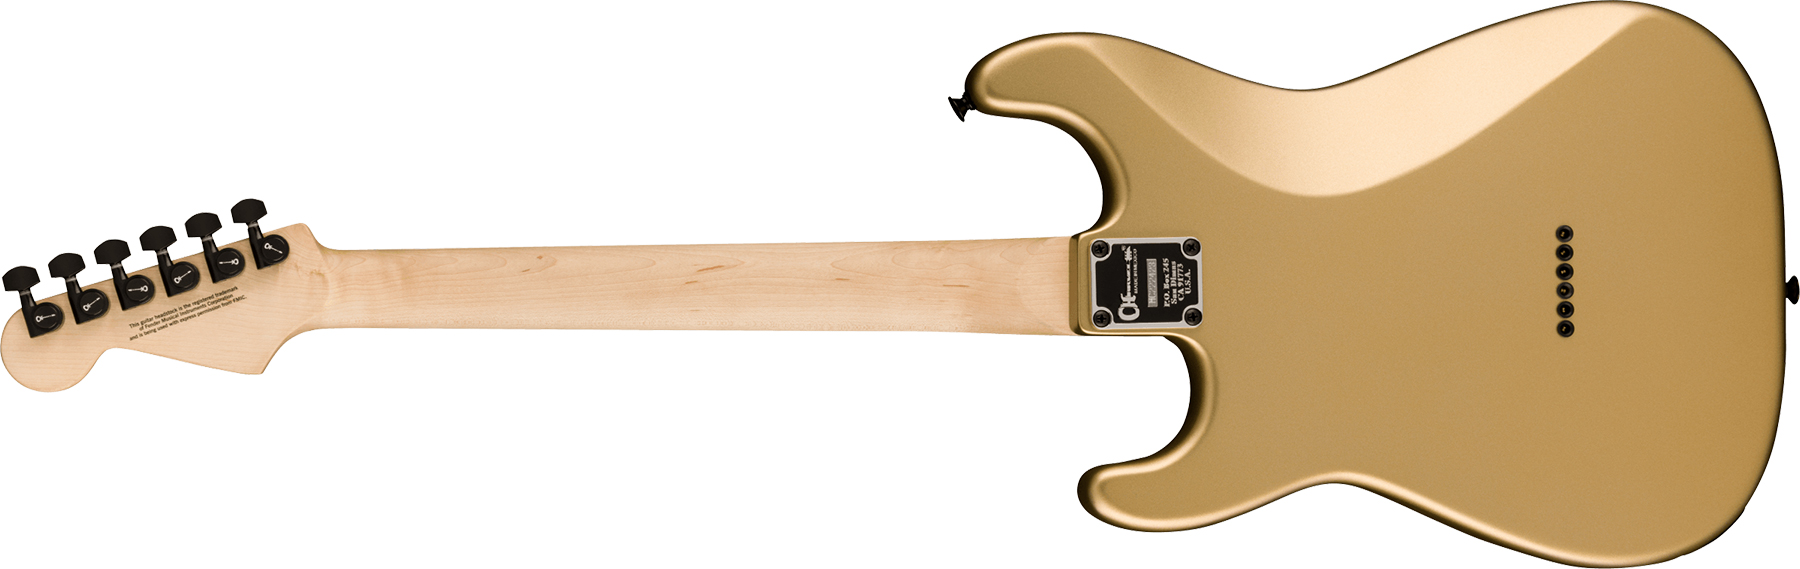 Charvel So-cal Style 1 Hh Ht E Pro-mod 2h Seymour Duncan Eb - Pharaohs Gold - E-Gitarre in Str-Form - Variation 1